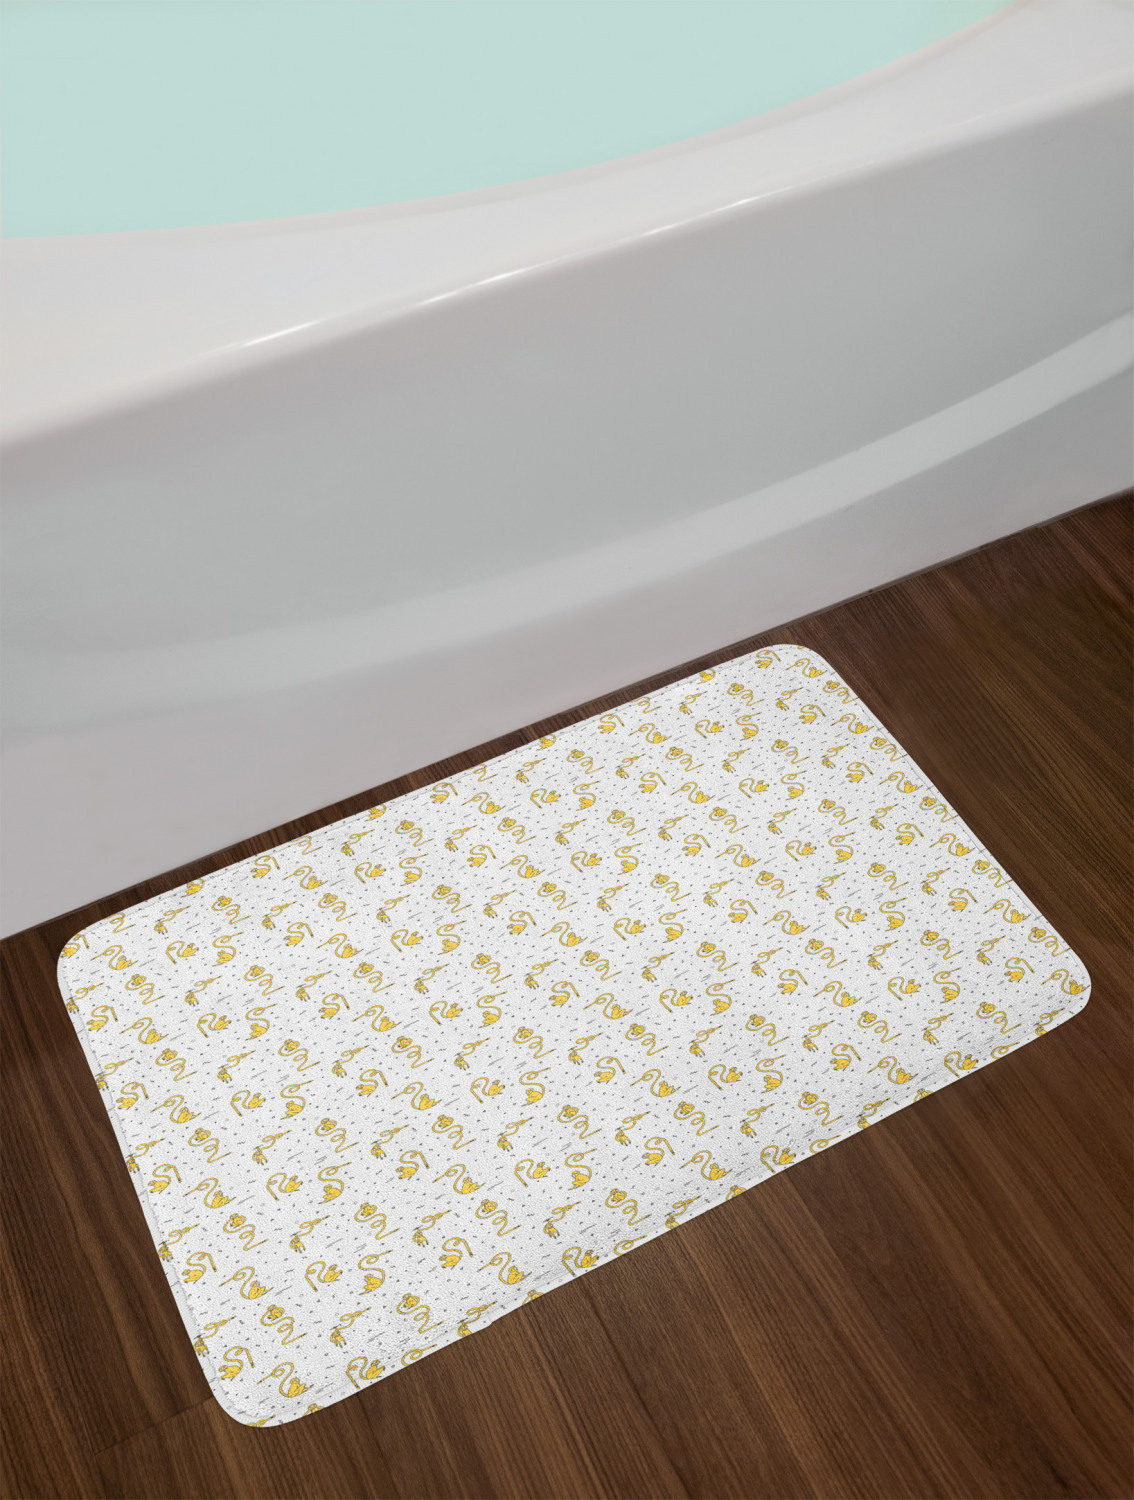 Monkey Animal Bath Rugs Absorbent Non Slip Door Mats Soft Carpet